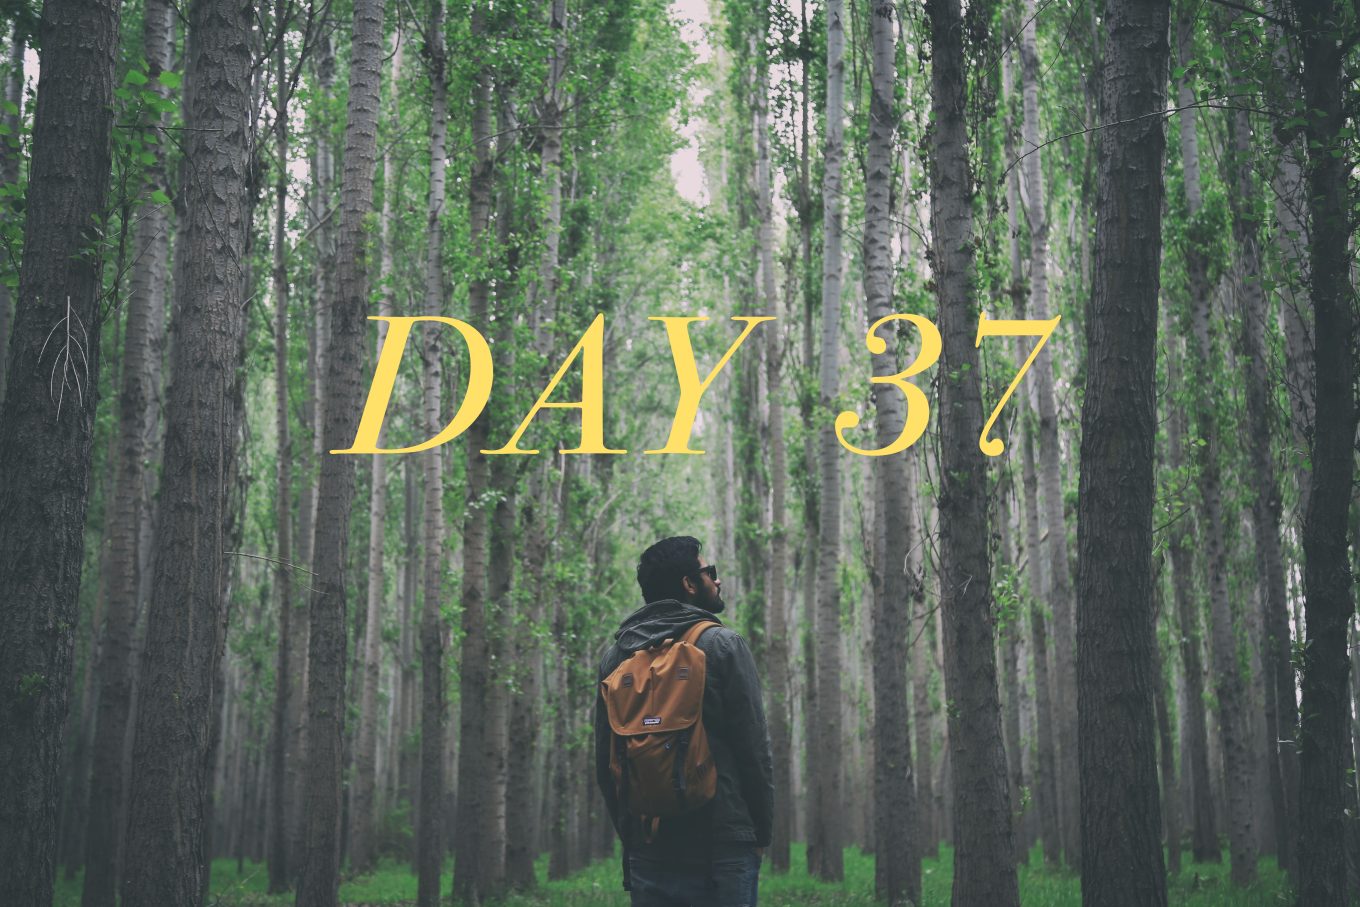 Day 37: April 13, 2022